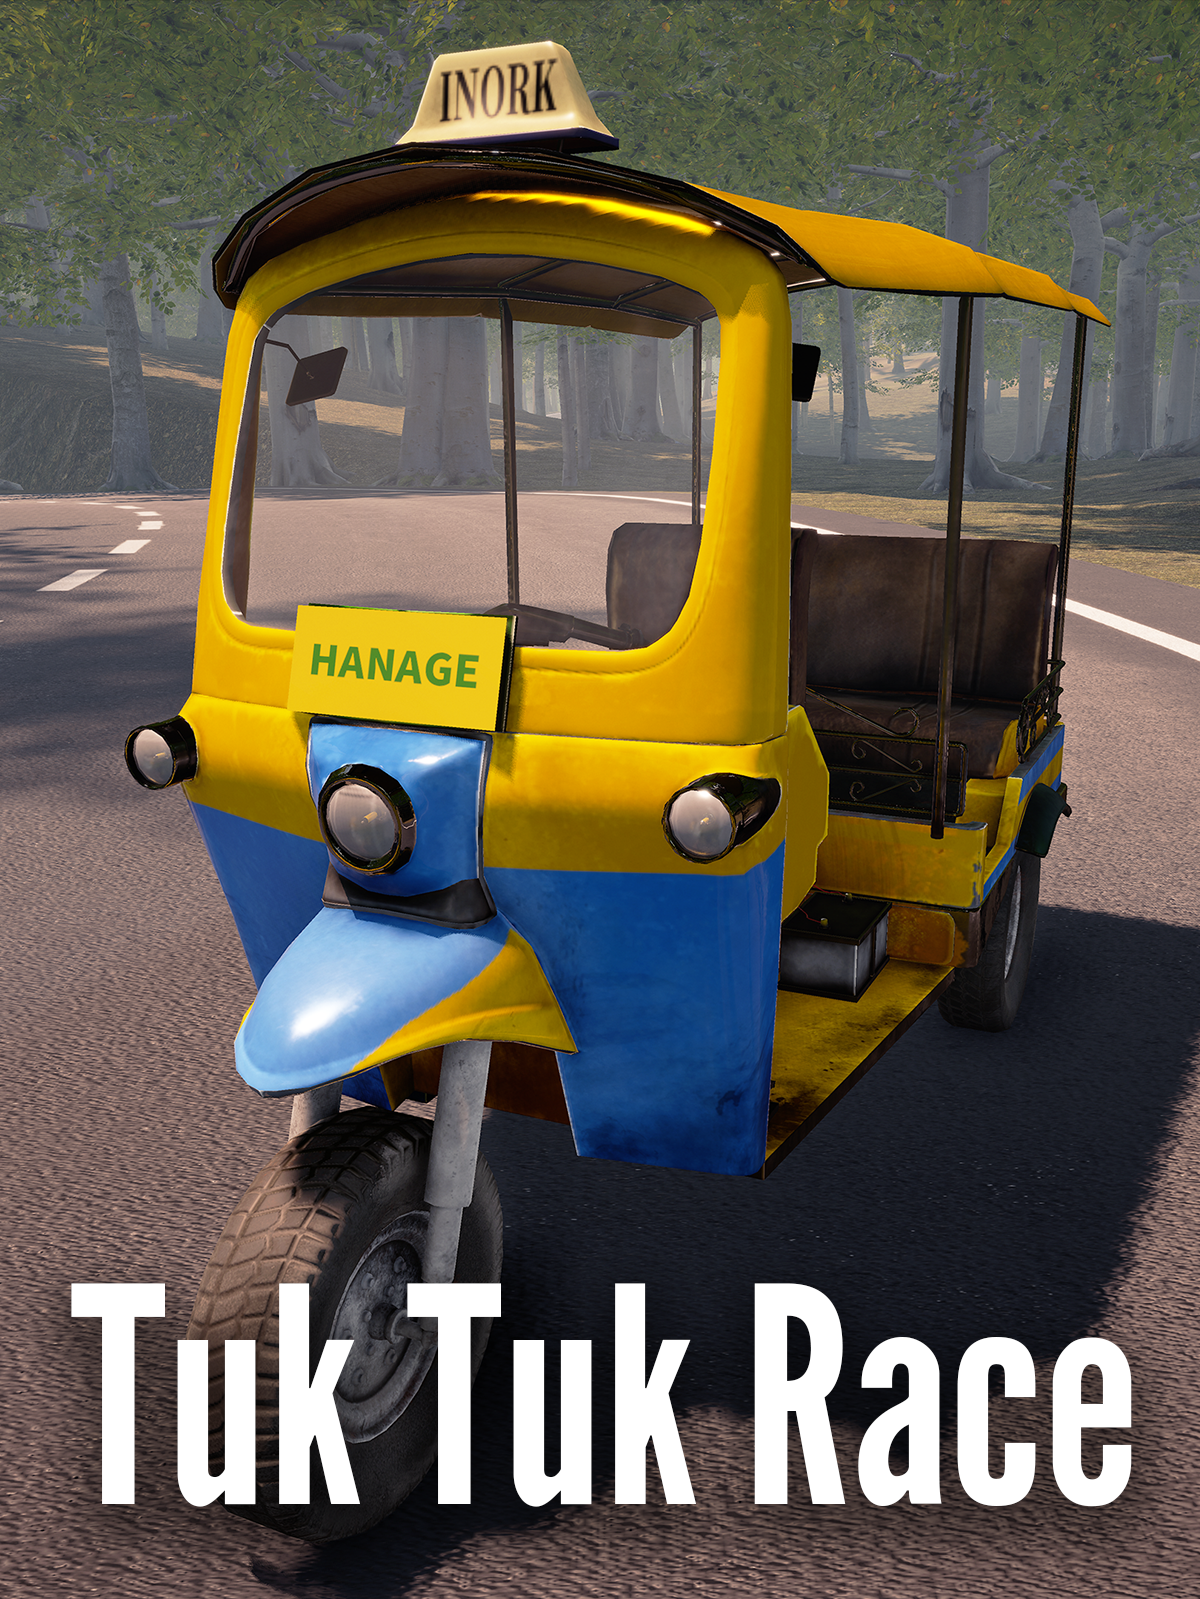 Tuk Tuk Race Download and Buy Today   Epic Games Store